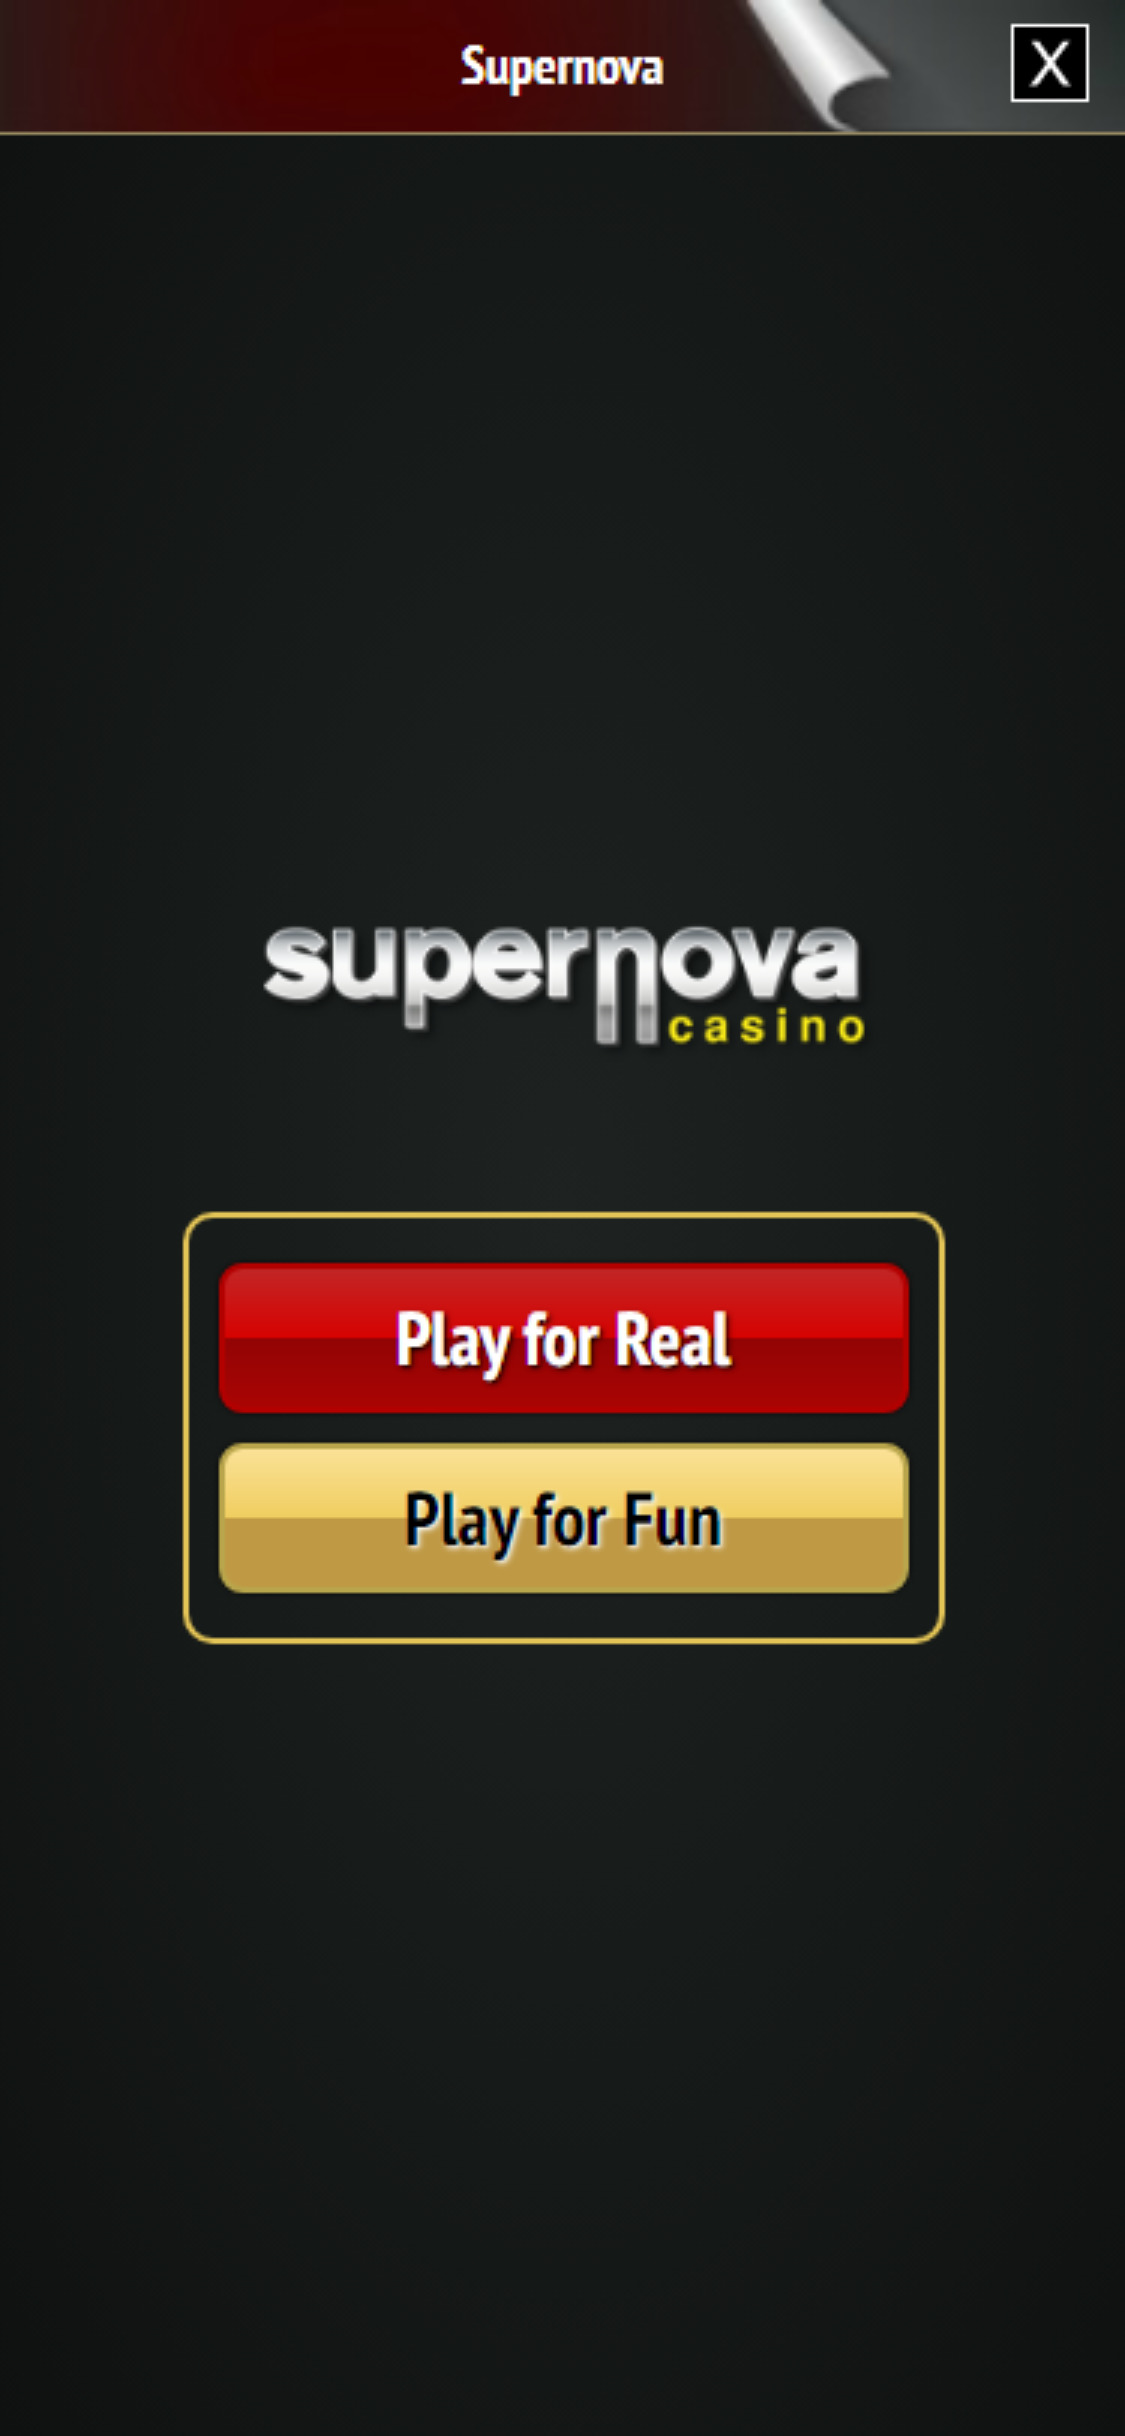 Super Nova Casino Mobile Login Review